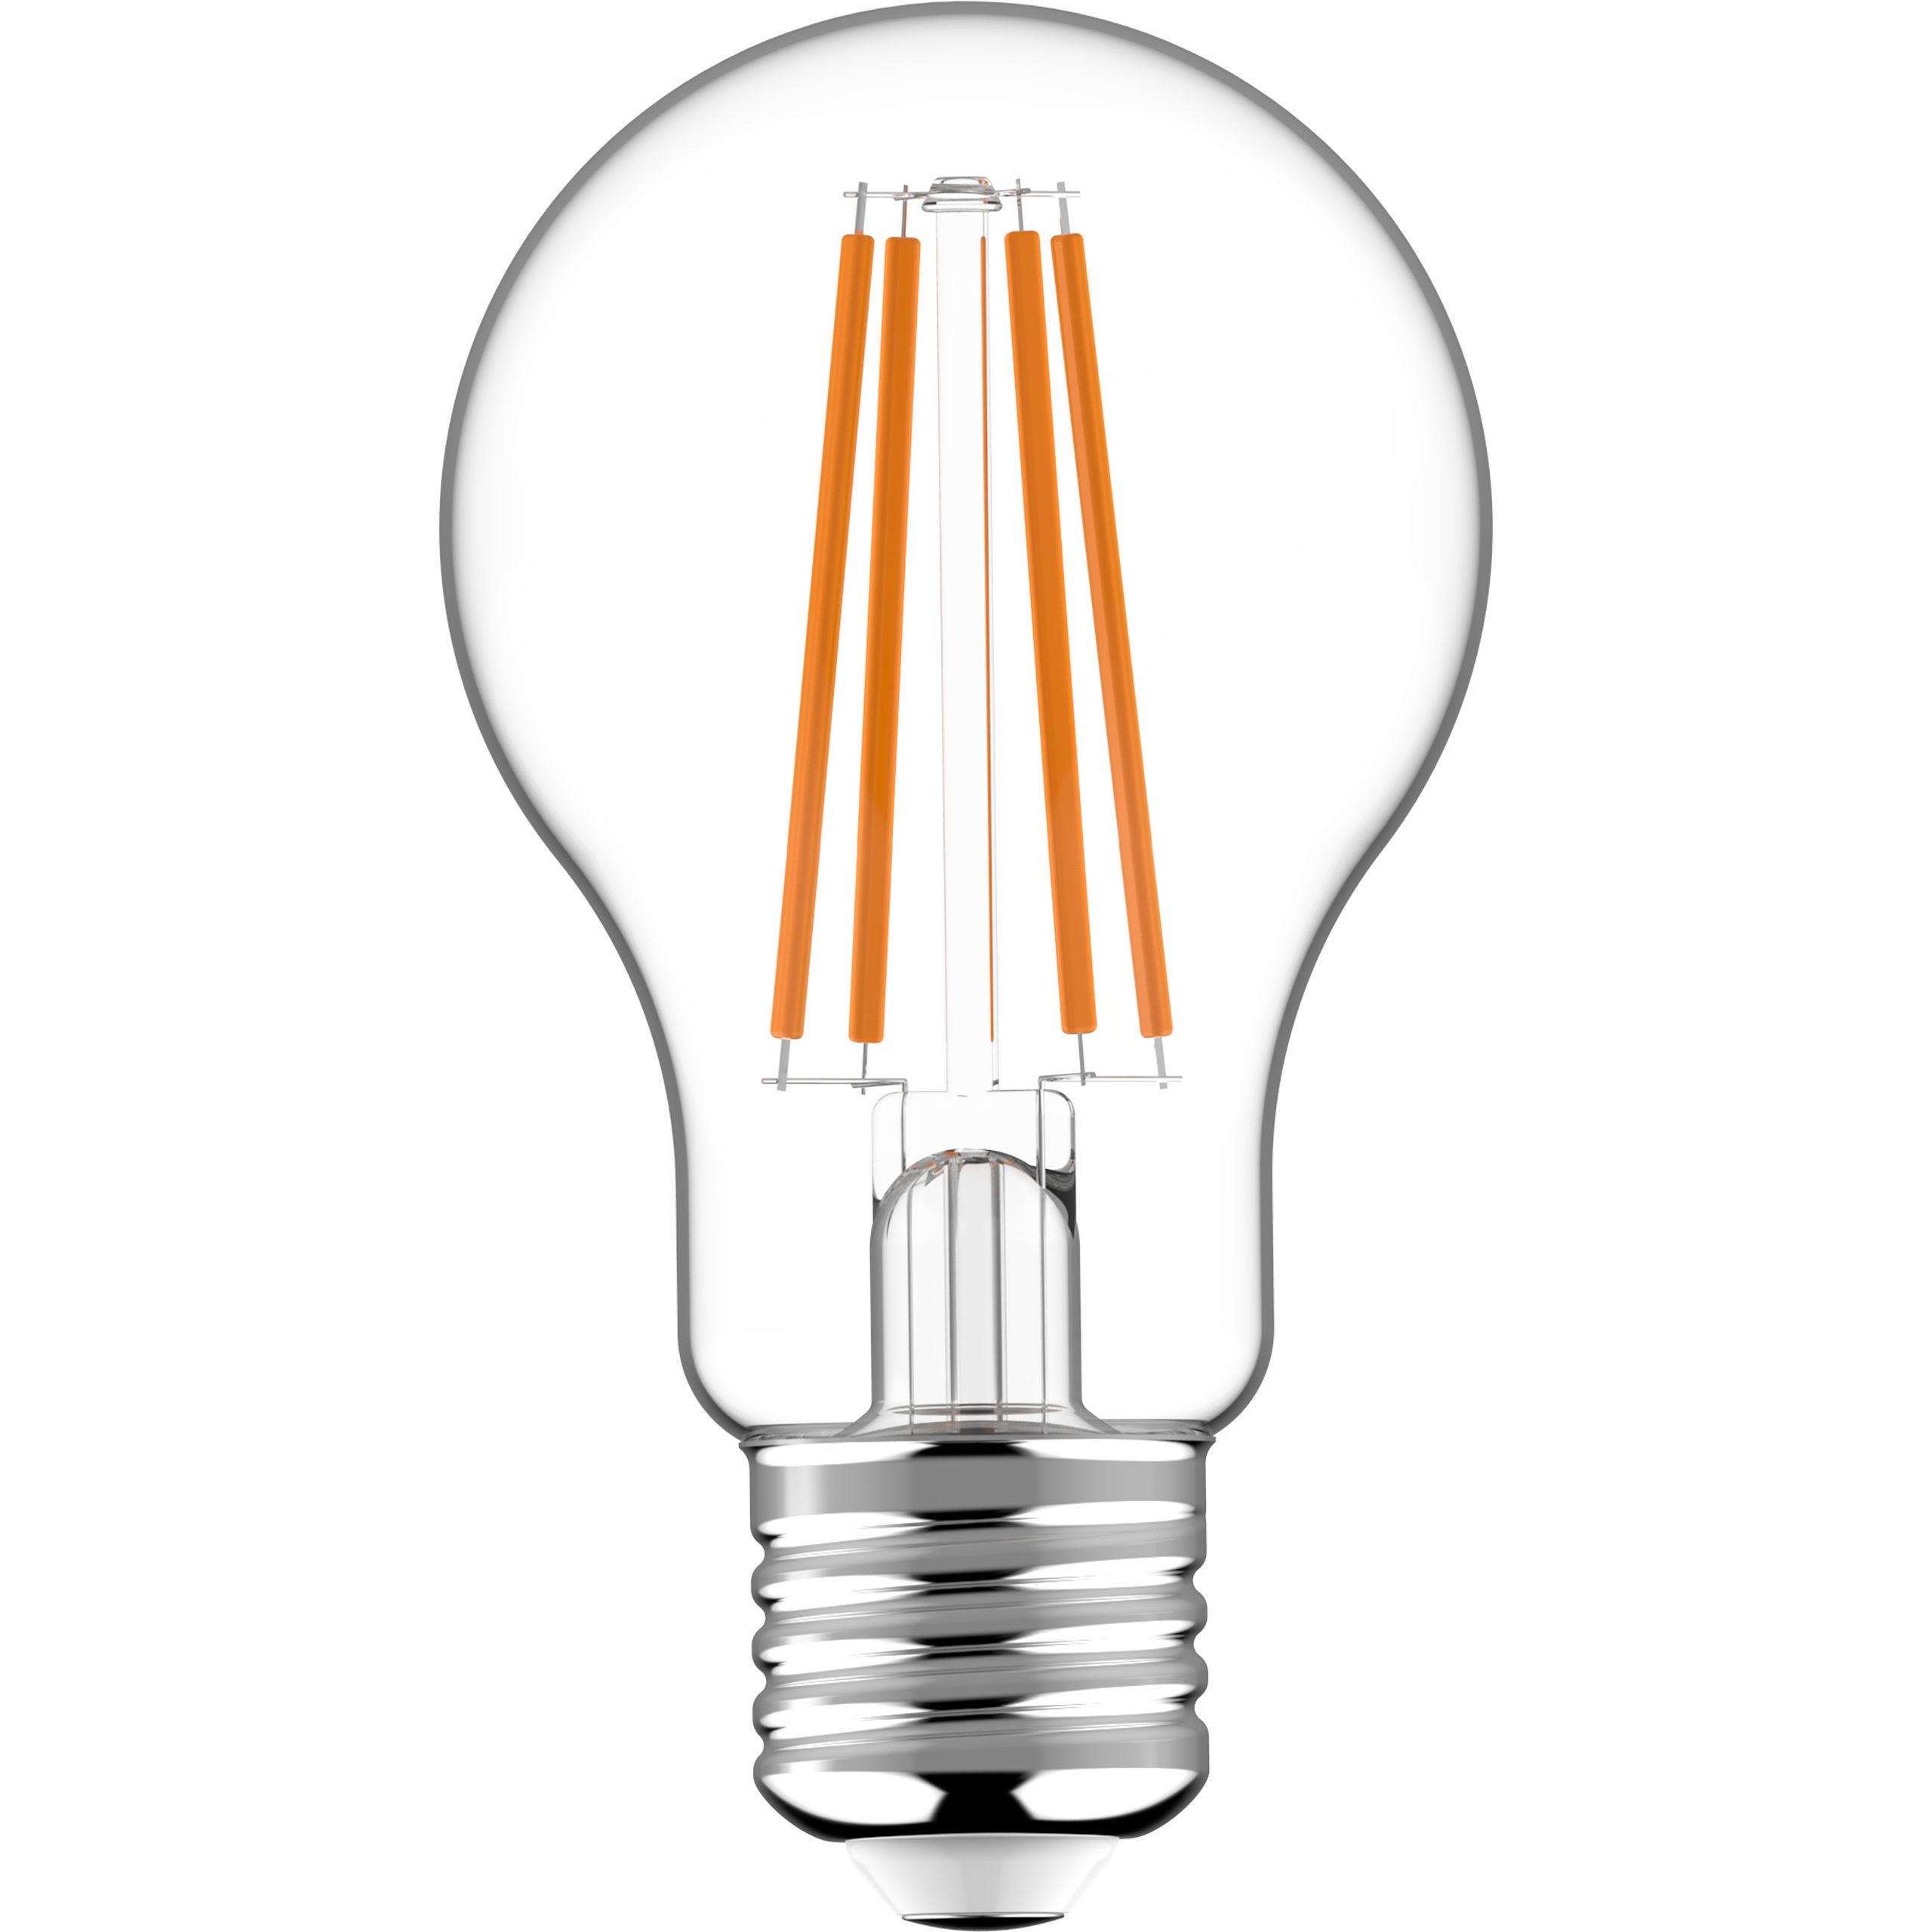 LED's light LED-Leuchtmittel 0620144 LED Glühbirne, E27, E27 dimmbar 7W warmweiß Klar A60